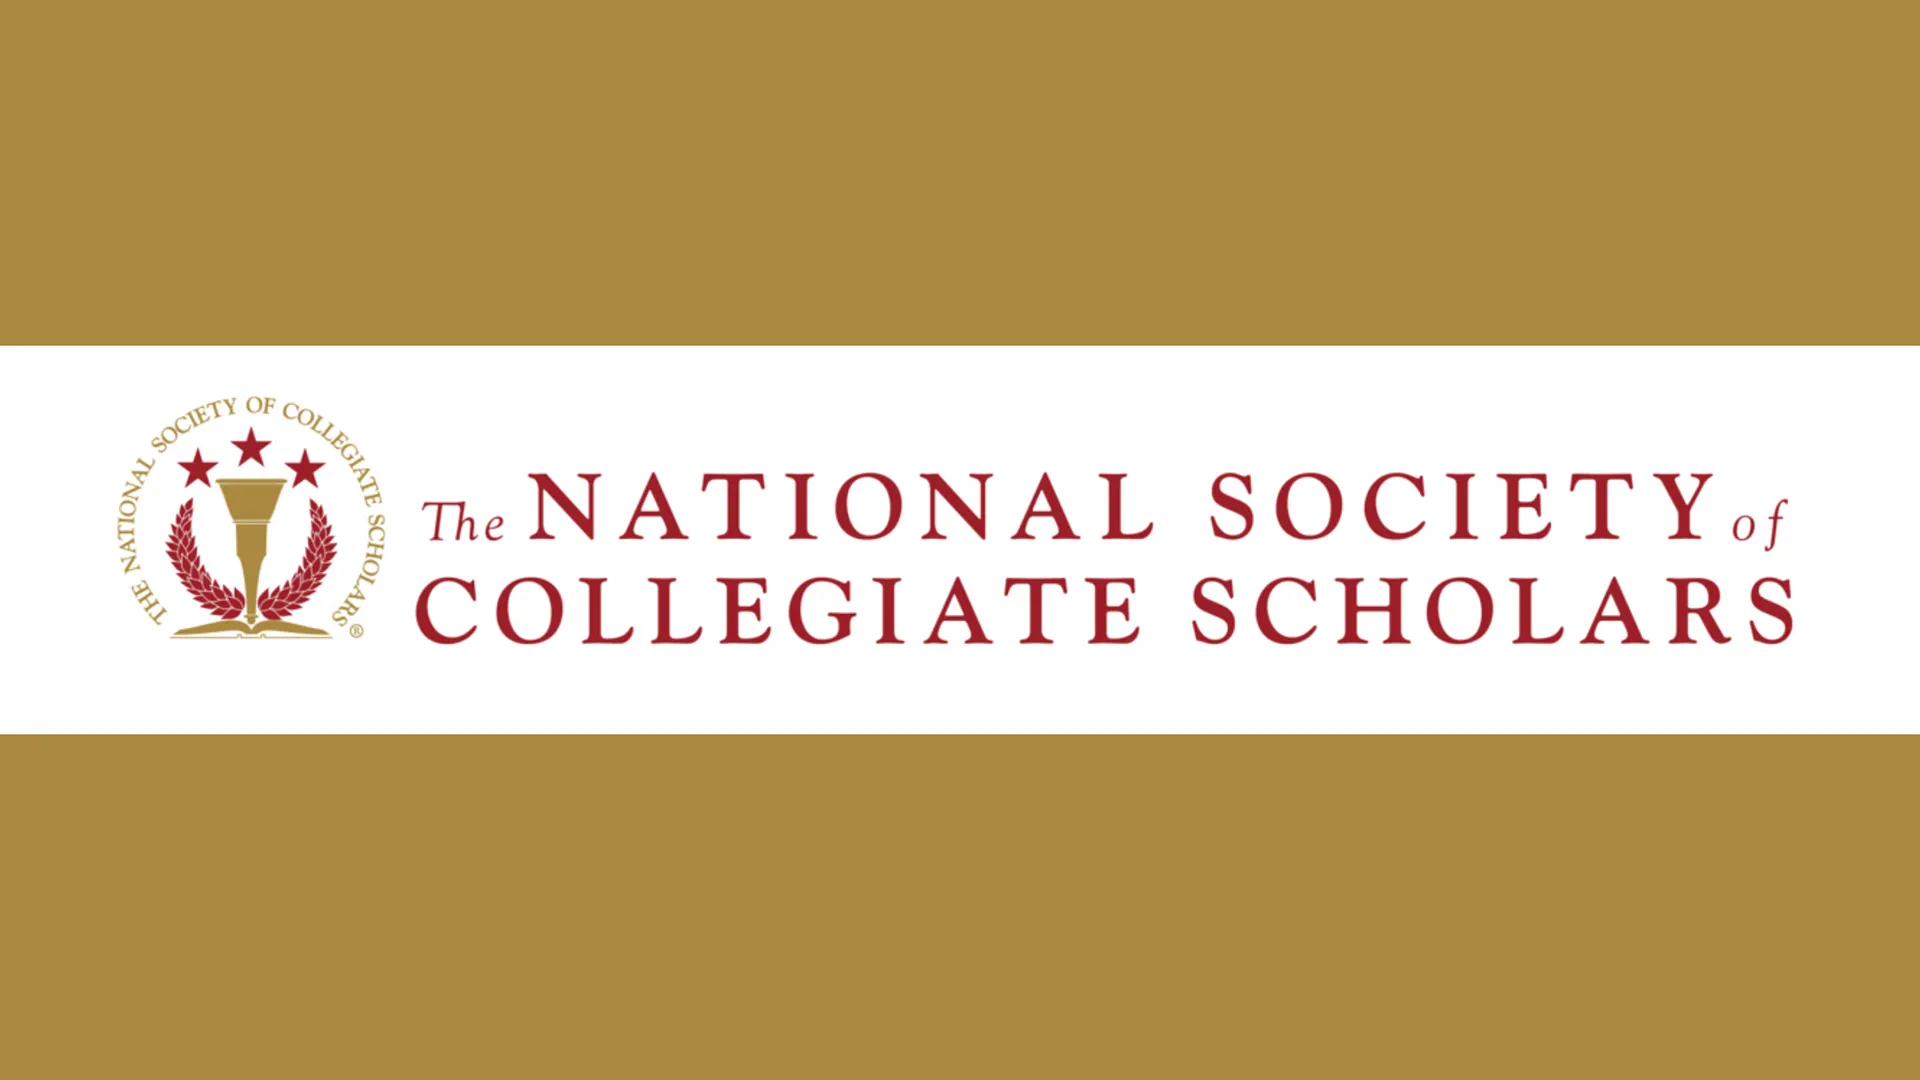 National Society of Collegiate Scholars web banner